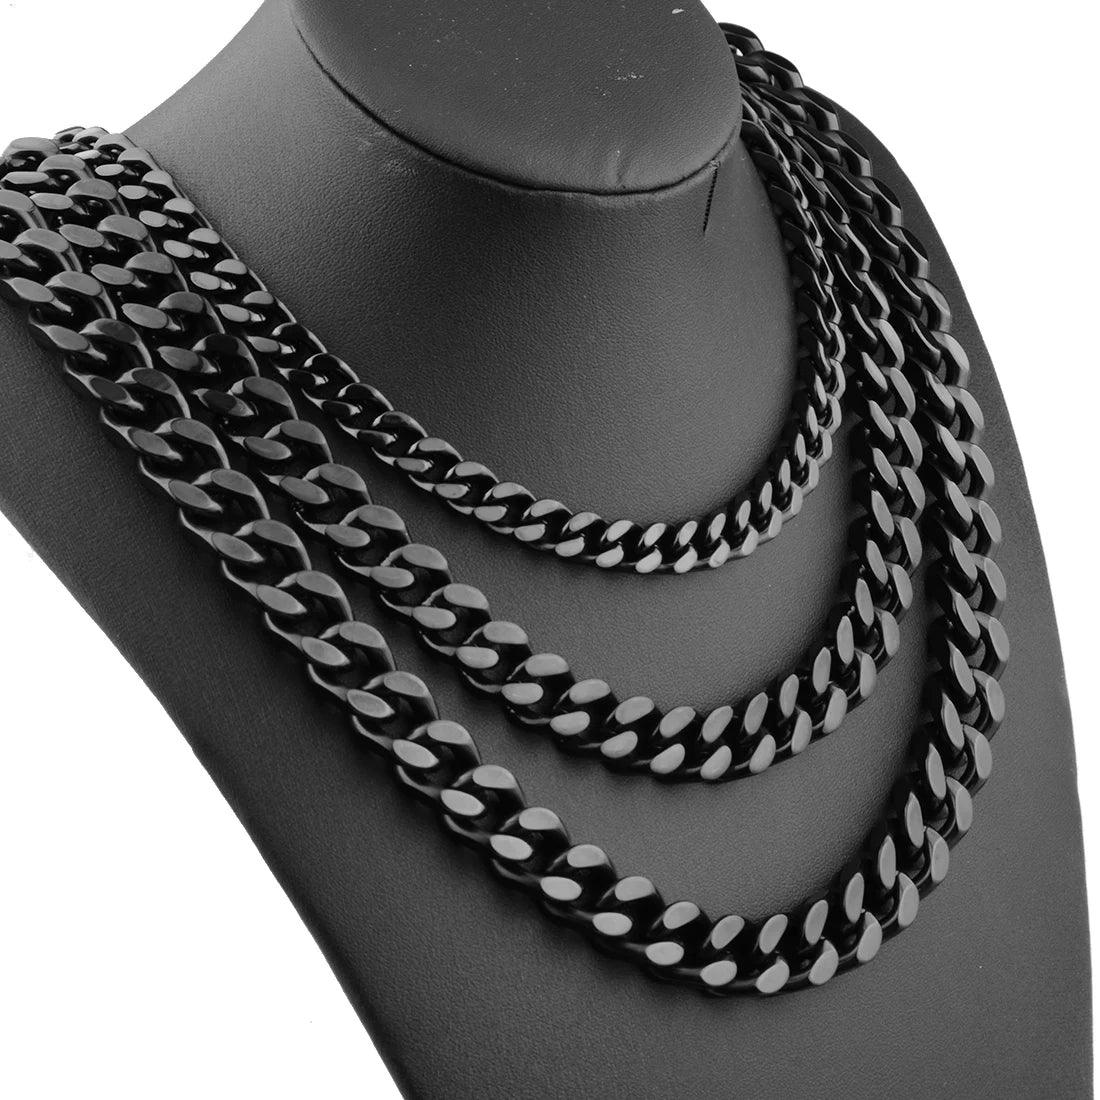 Men's Jewelry - Necklaces Black Jewelry Stainless Steel Miami Necklaces Lock Clasp Black Punk Jewelry